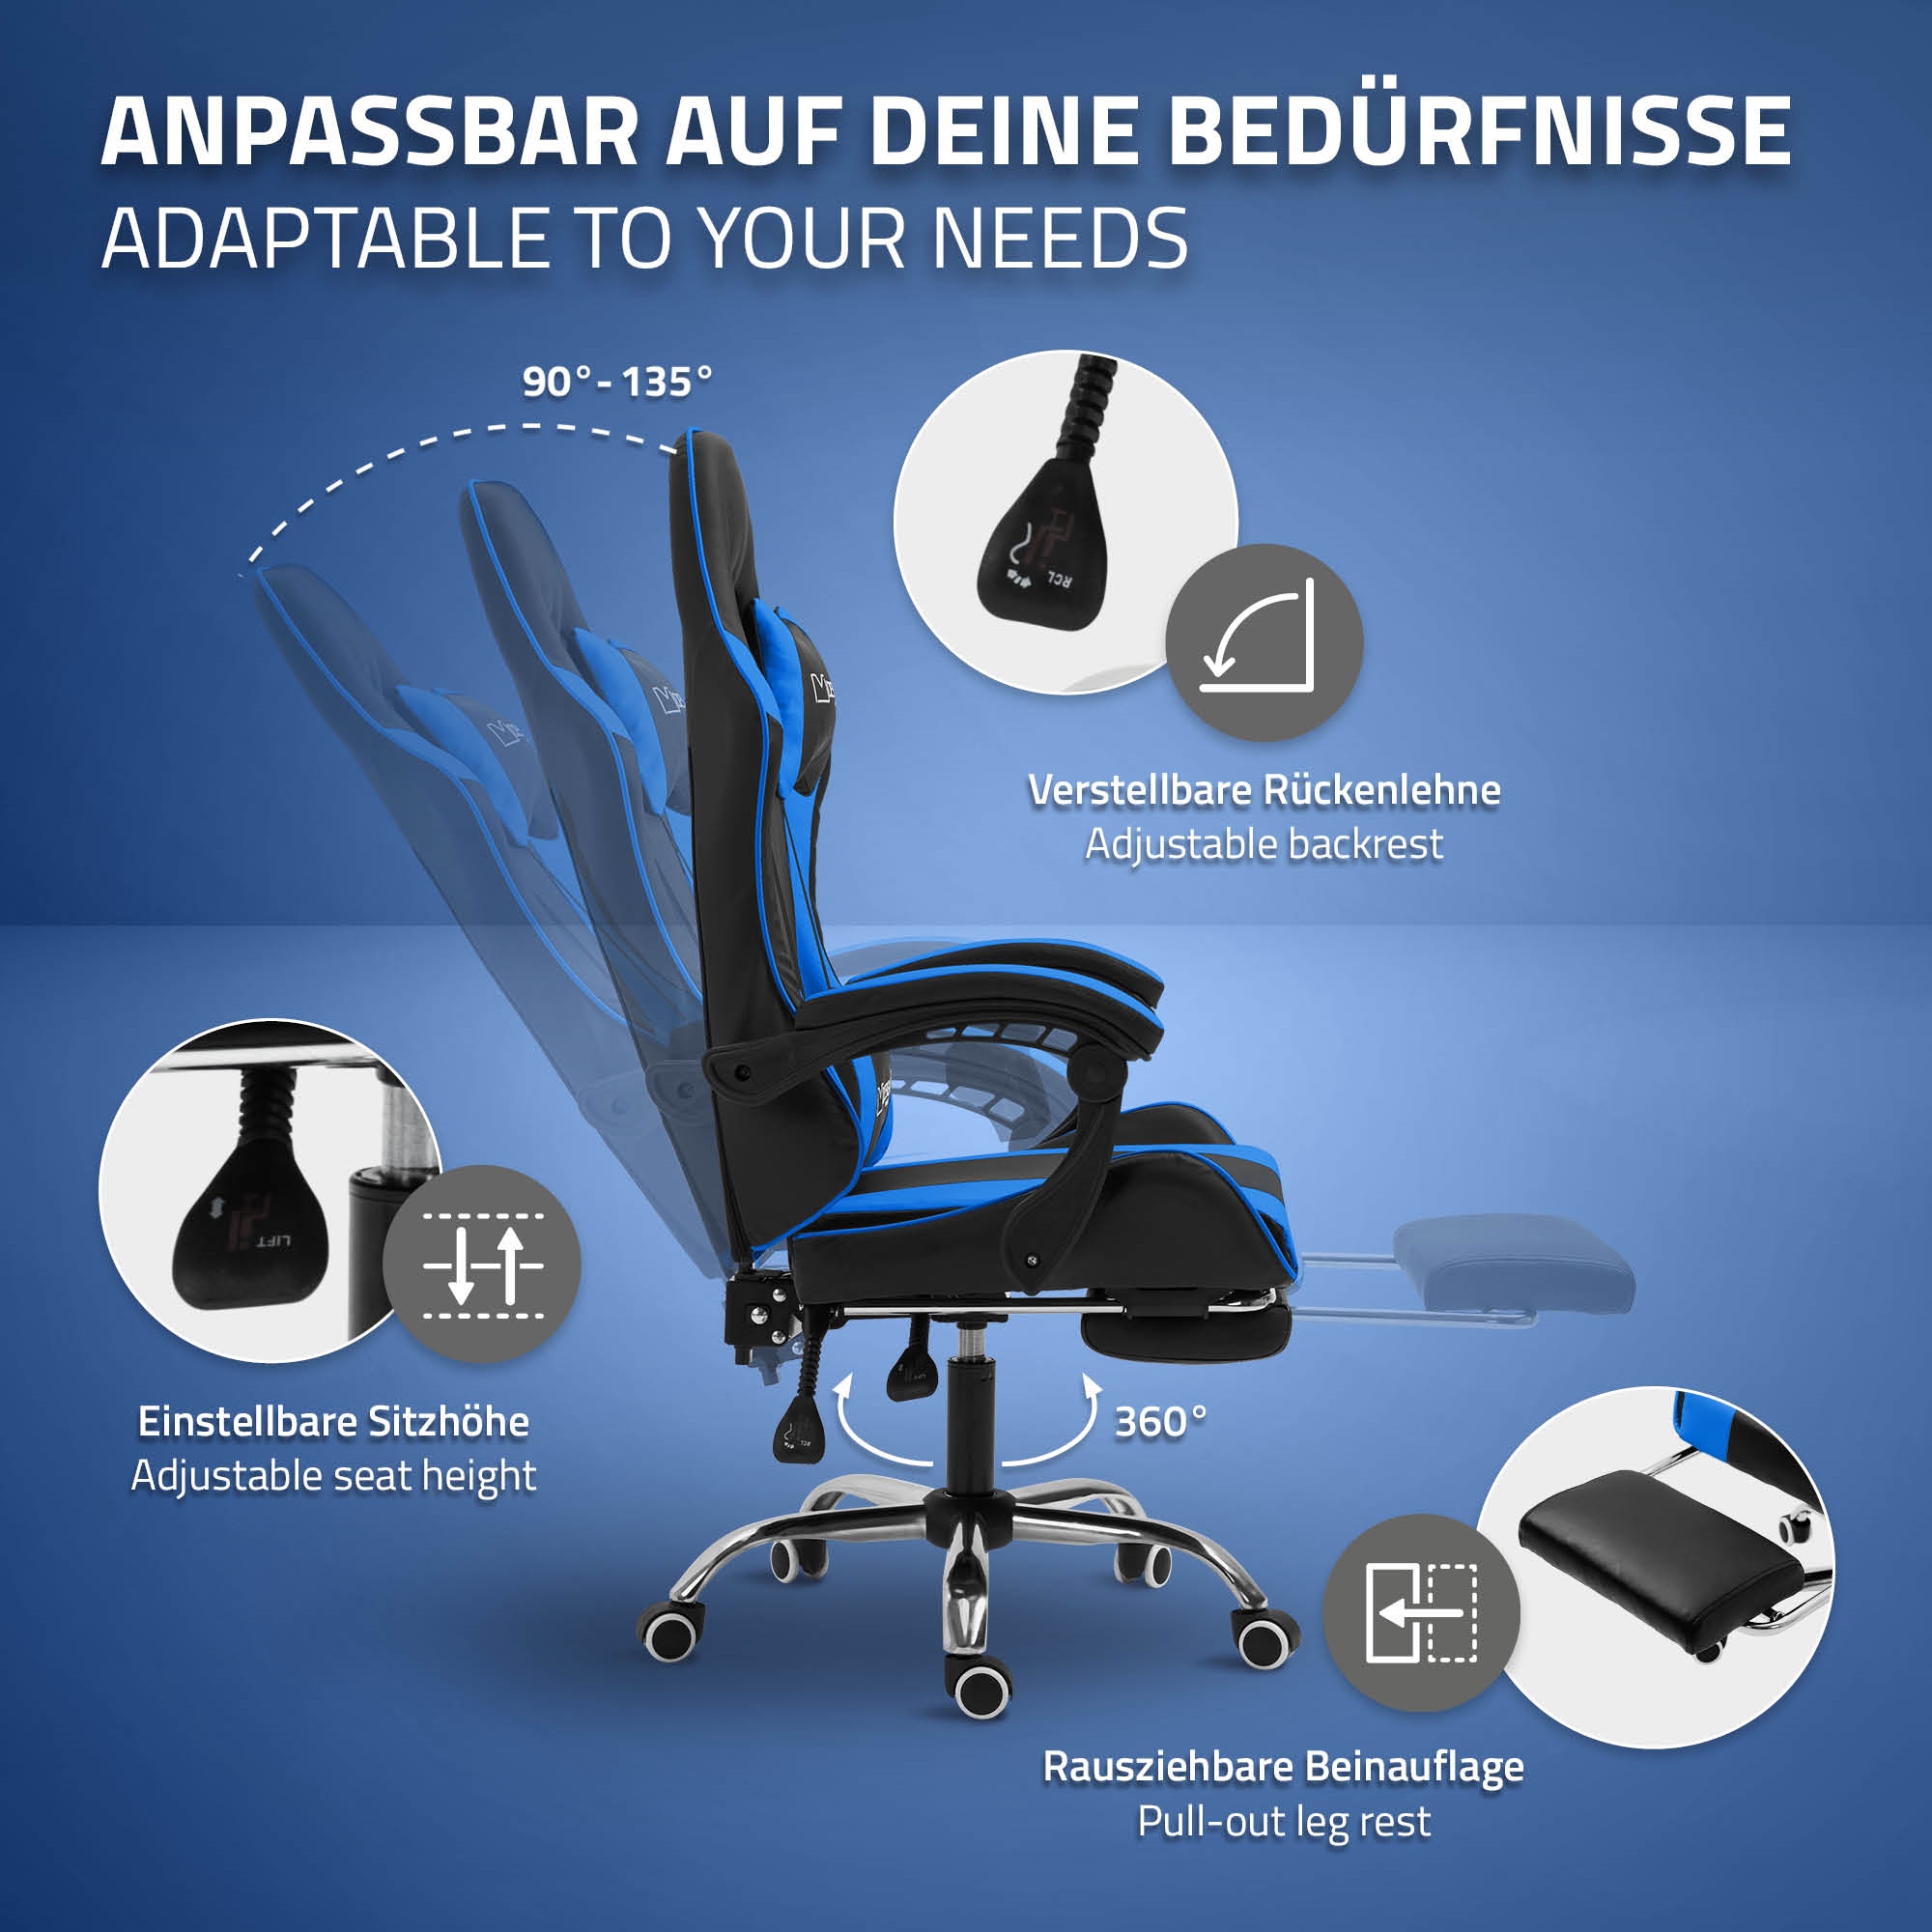 Massage Gaming Stuhl Bürostuhl Racing Verstellbar Gaming Chair Schreibtischstuhl